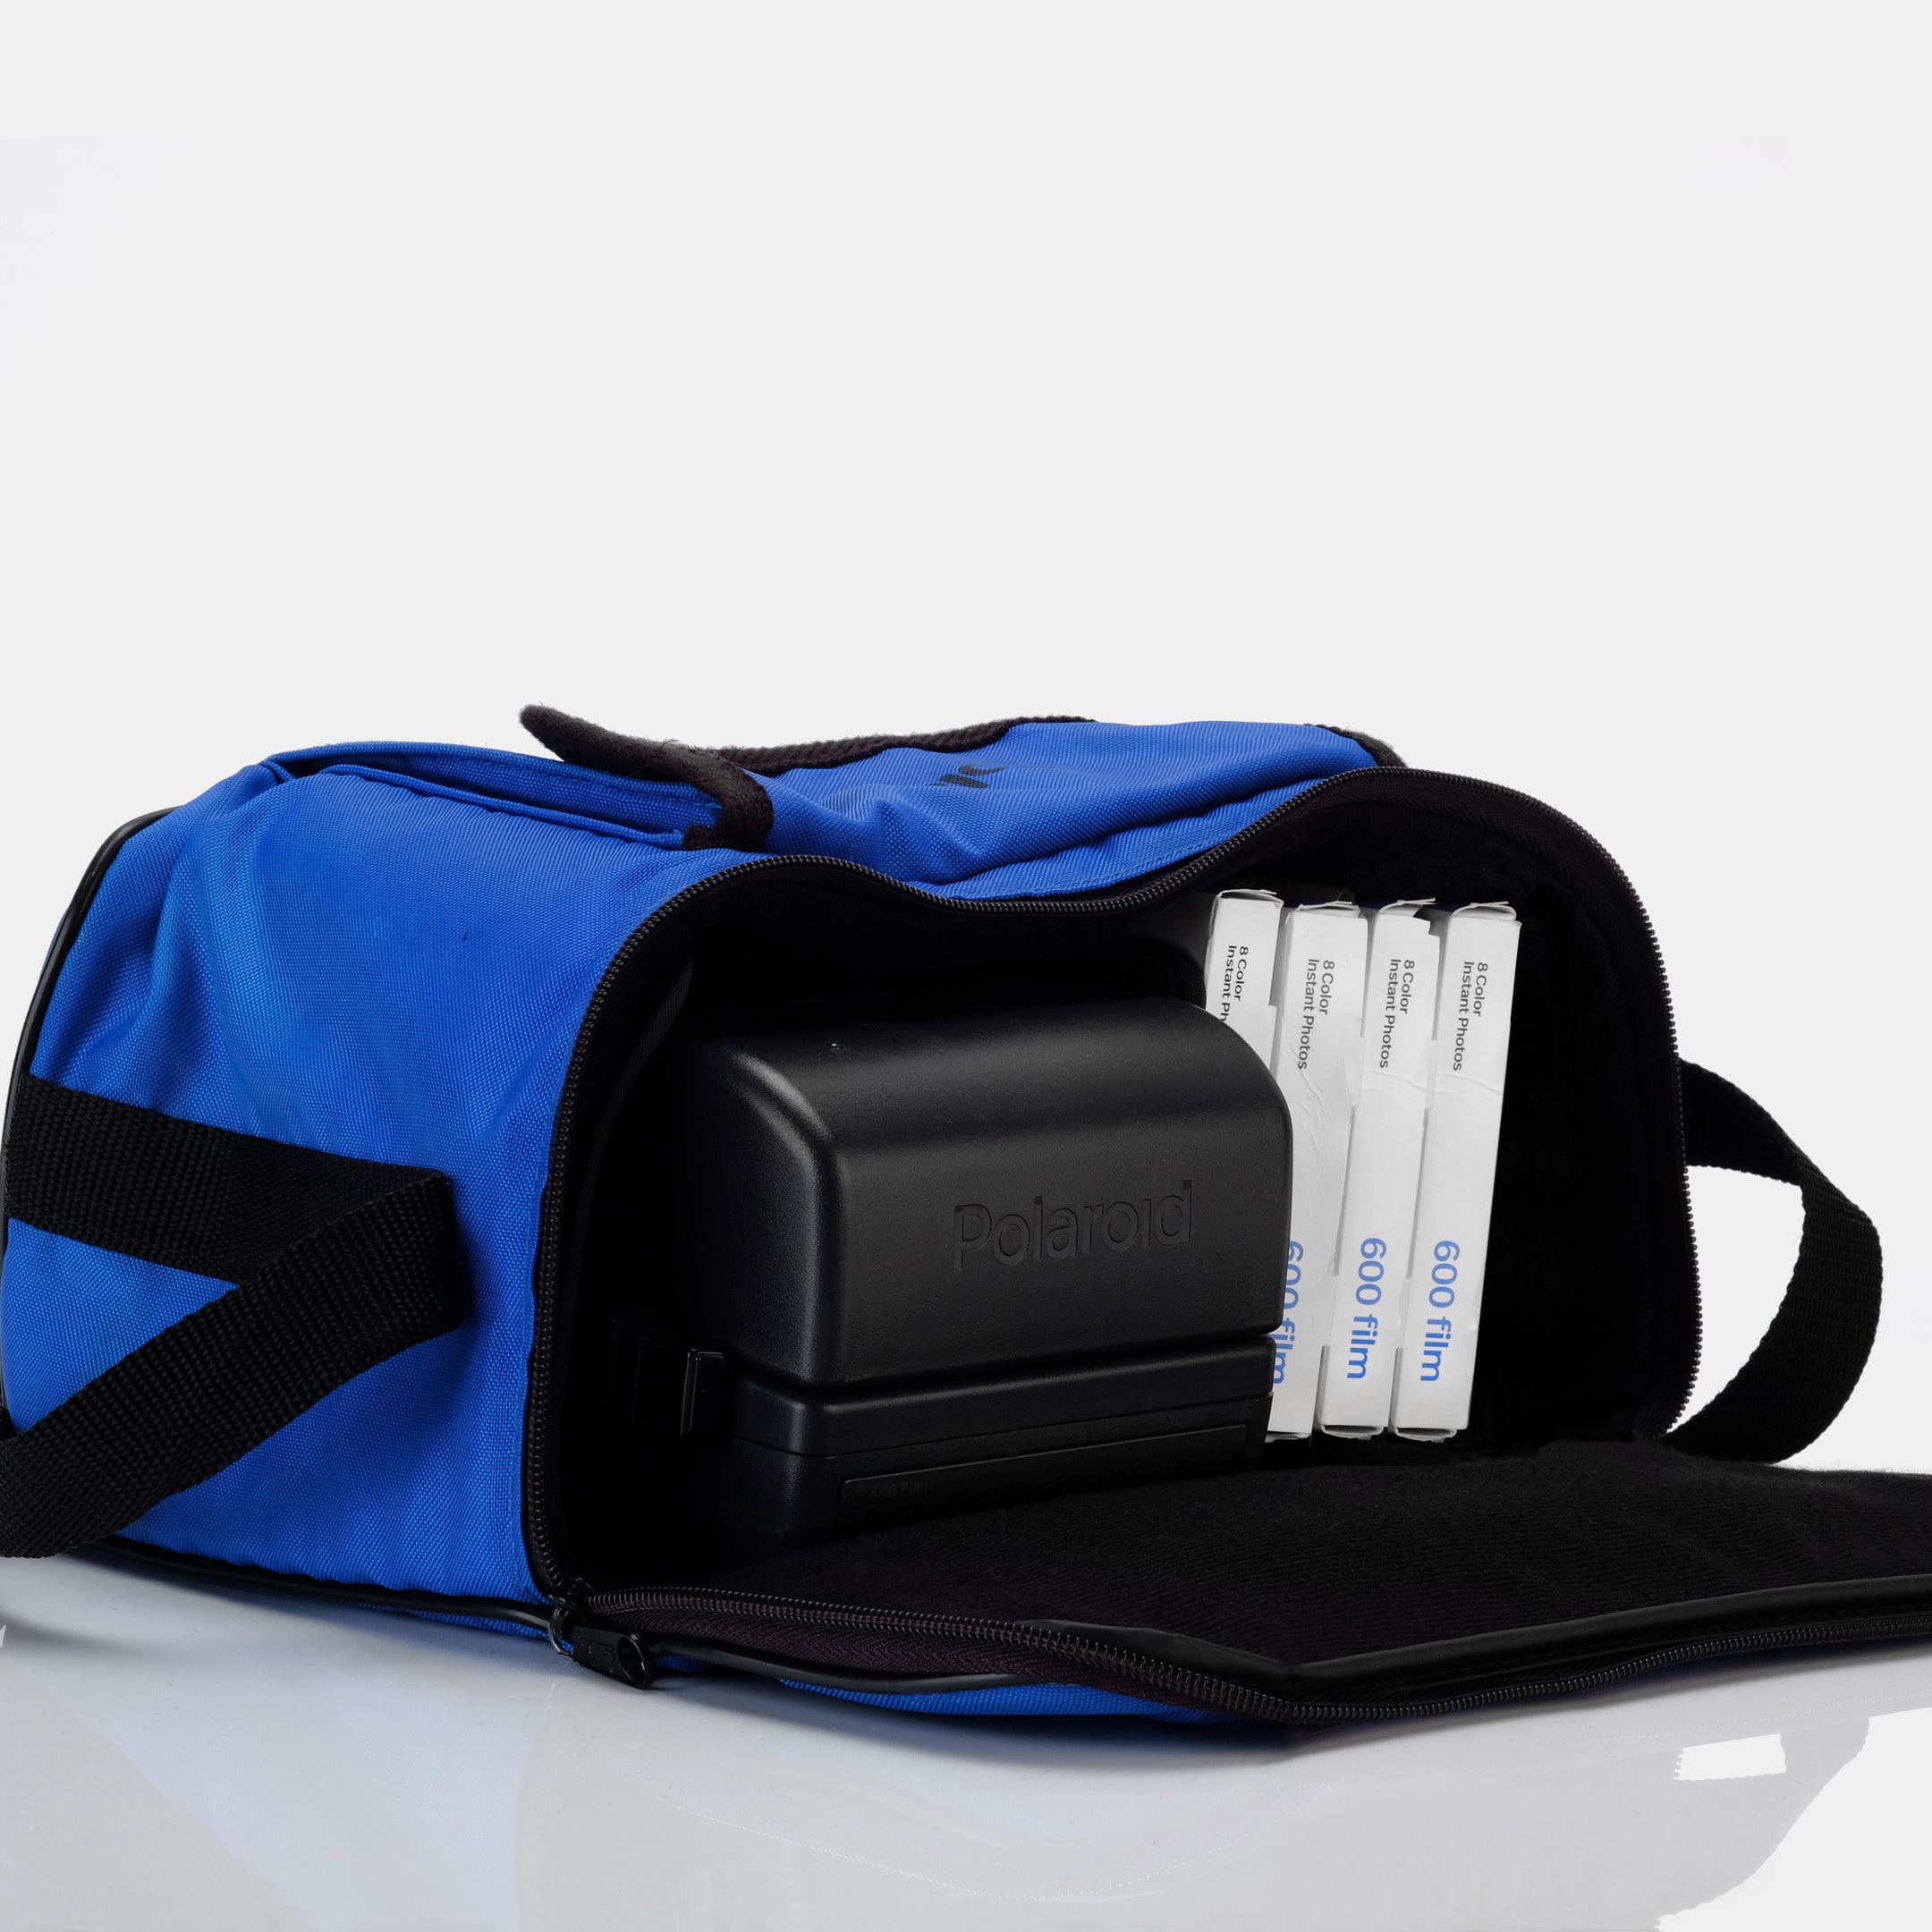 Blue Polaroid Camera and Film Bag